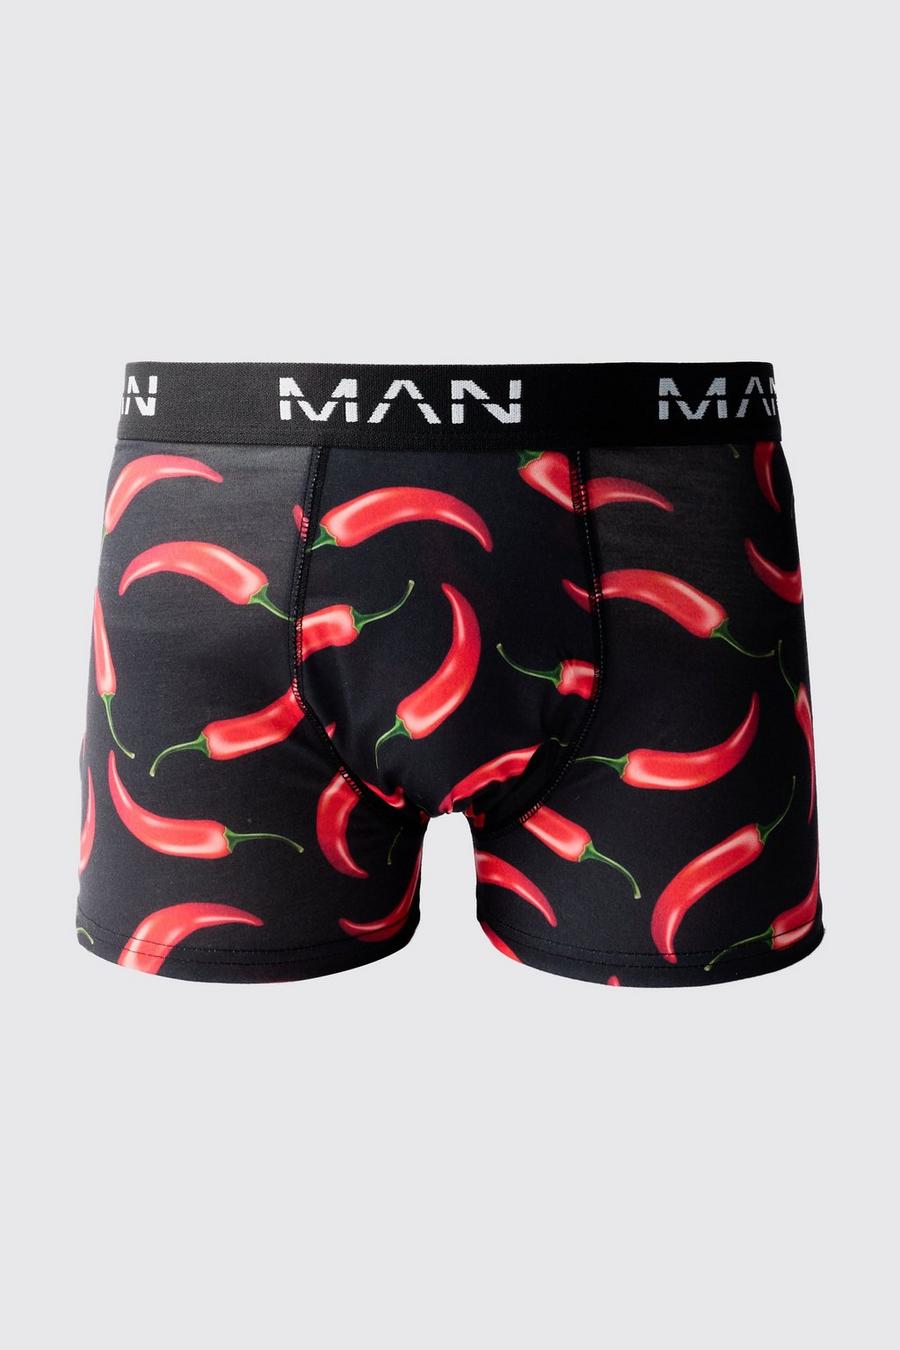 Man Boxershorts mit Chilli Pepper Print, Multi image number 1